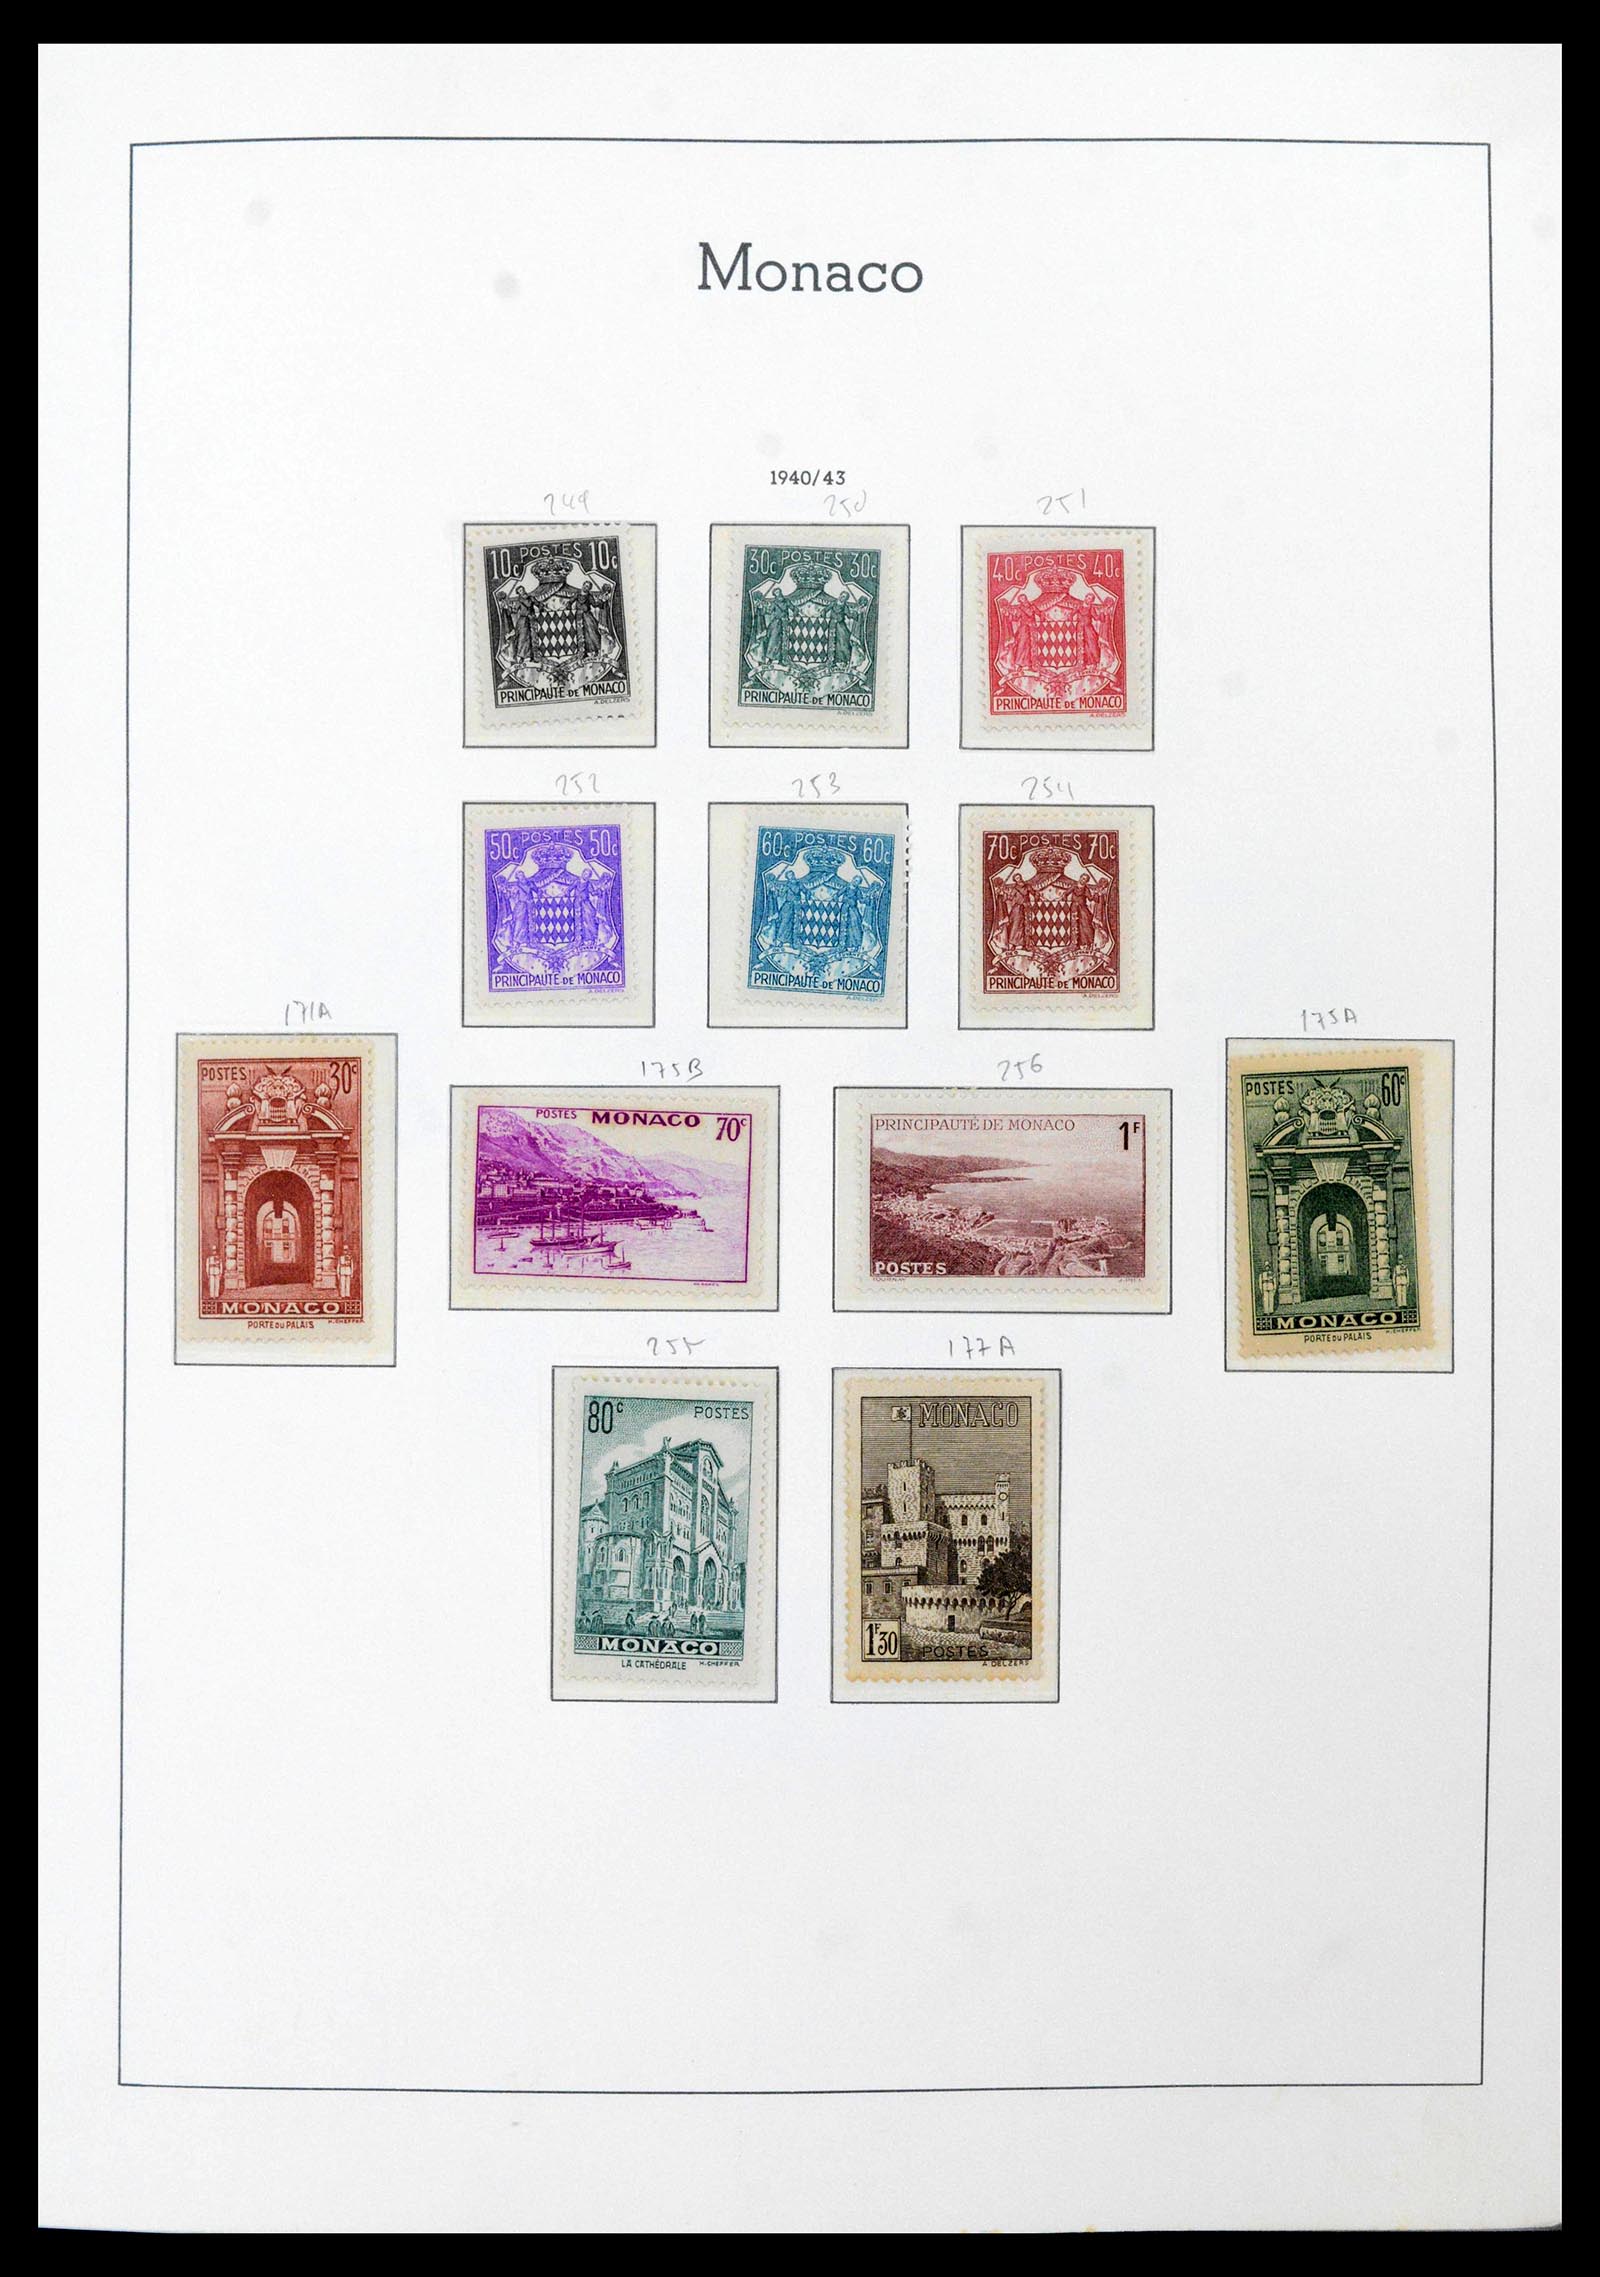 39250 0019 - Stamp collection 39250 Monaco 1885-1995.